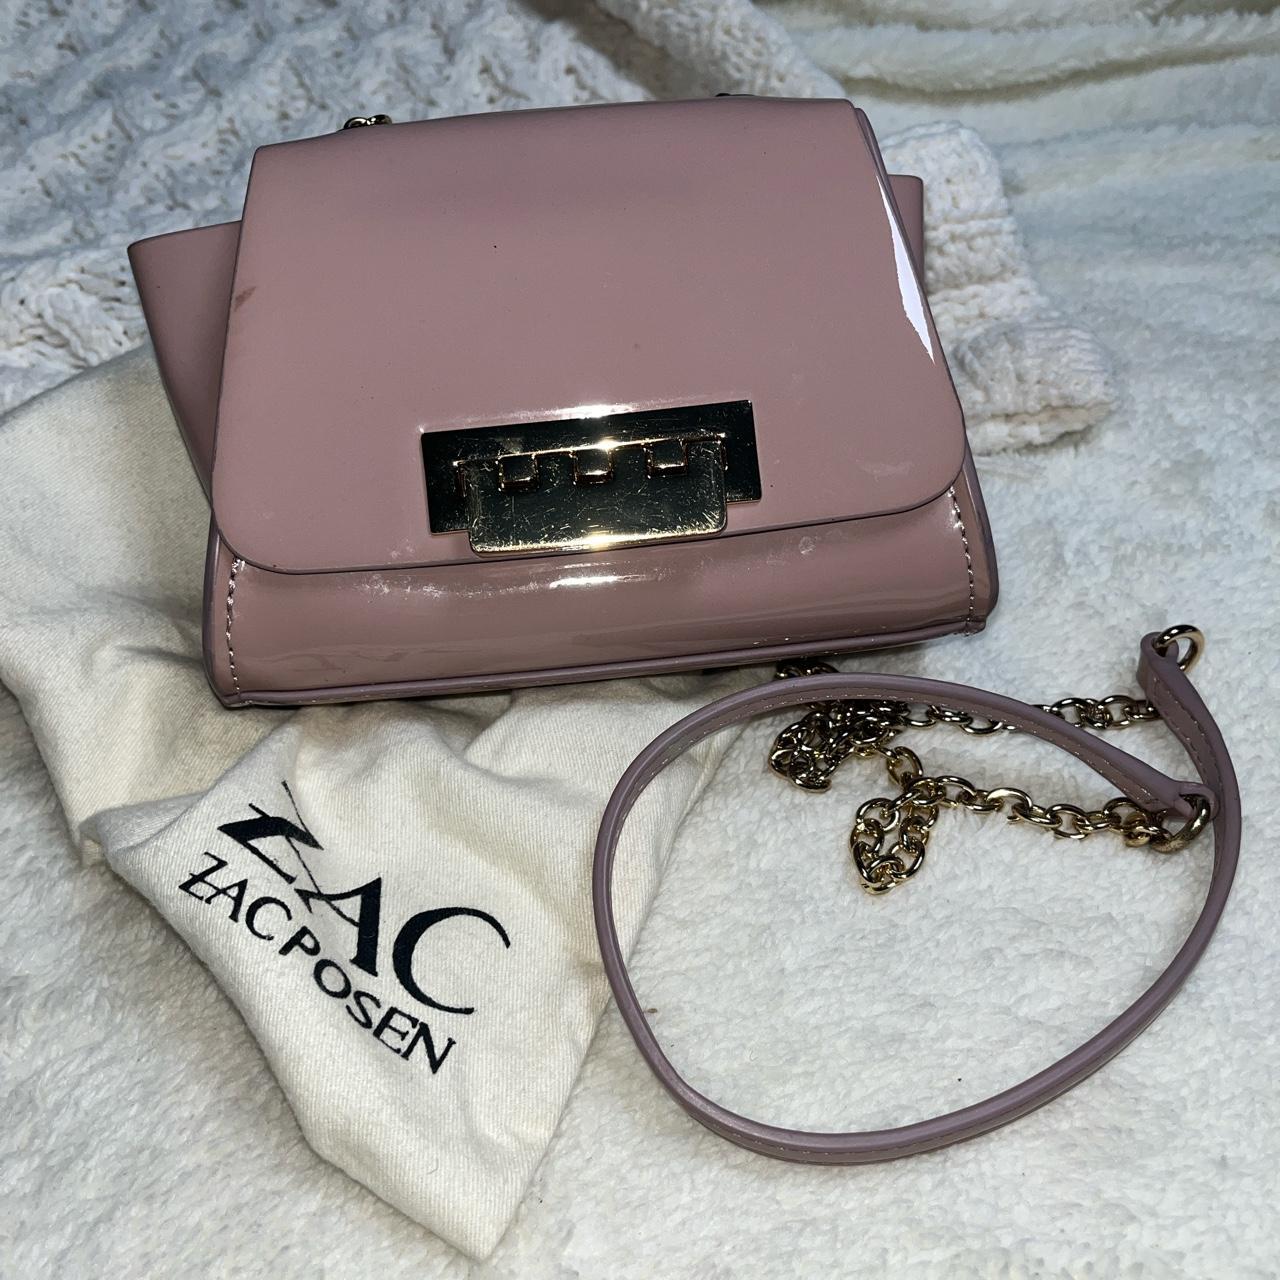 Zac Posen Women's Gold and Pink Bag